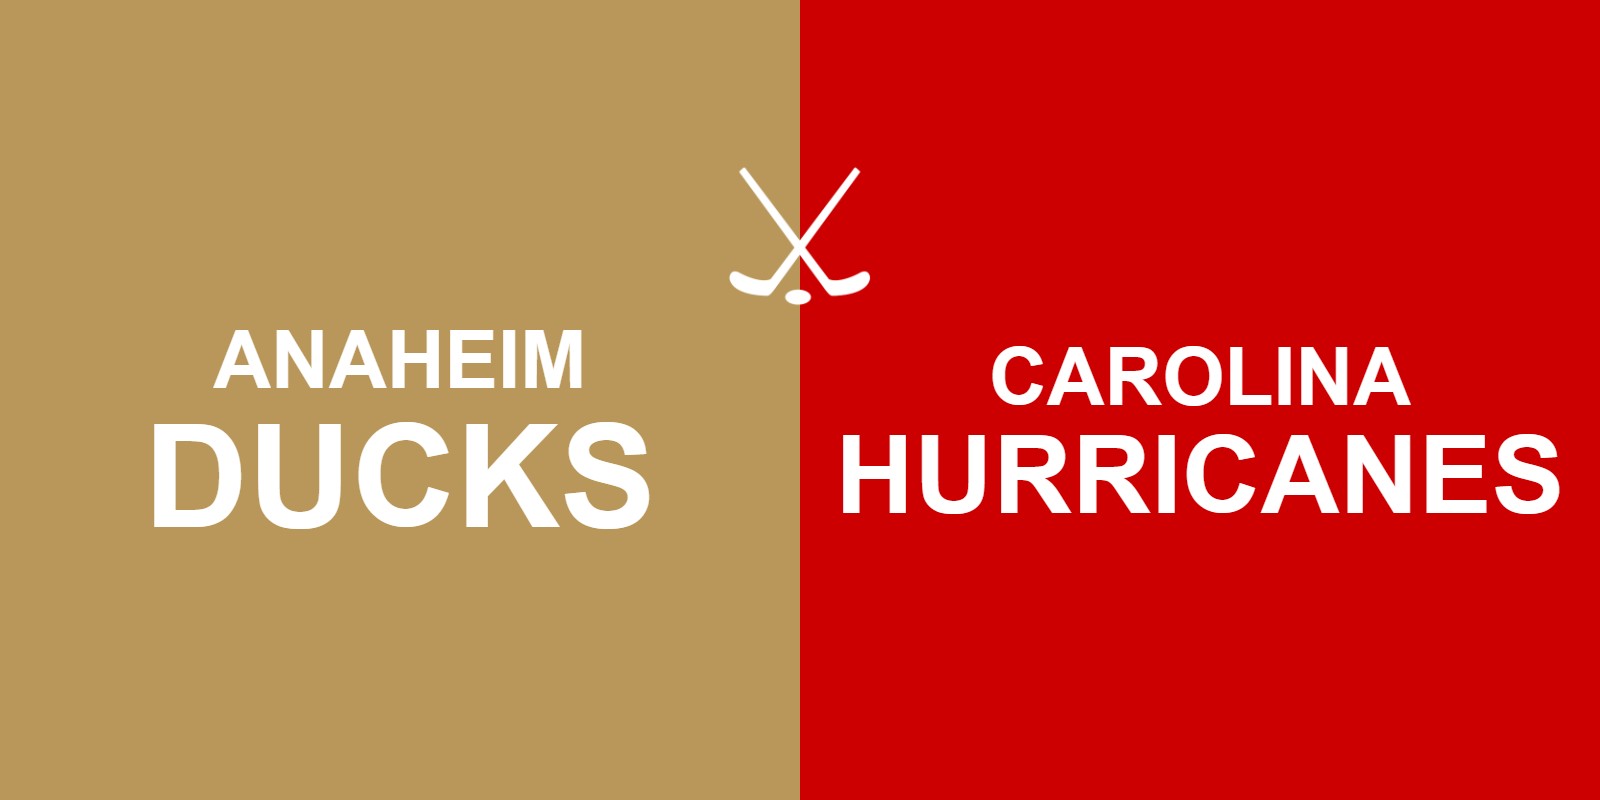 Ducks vs Hurricanes